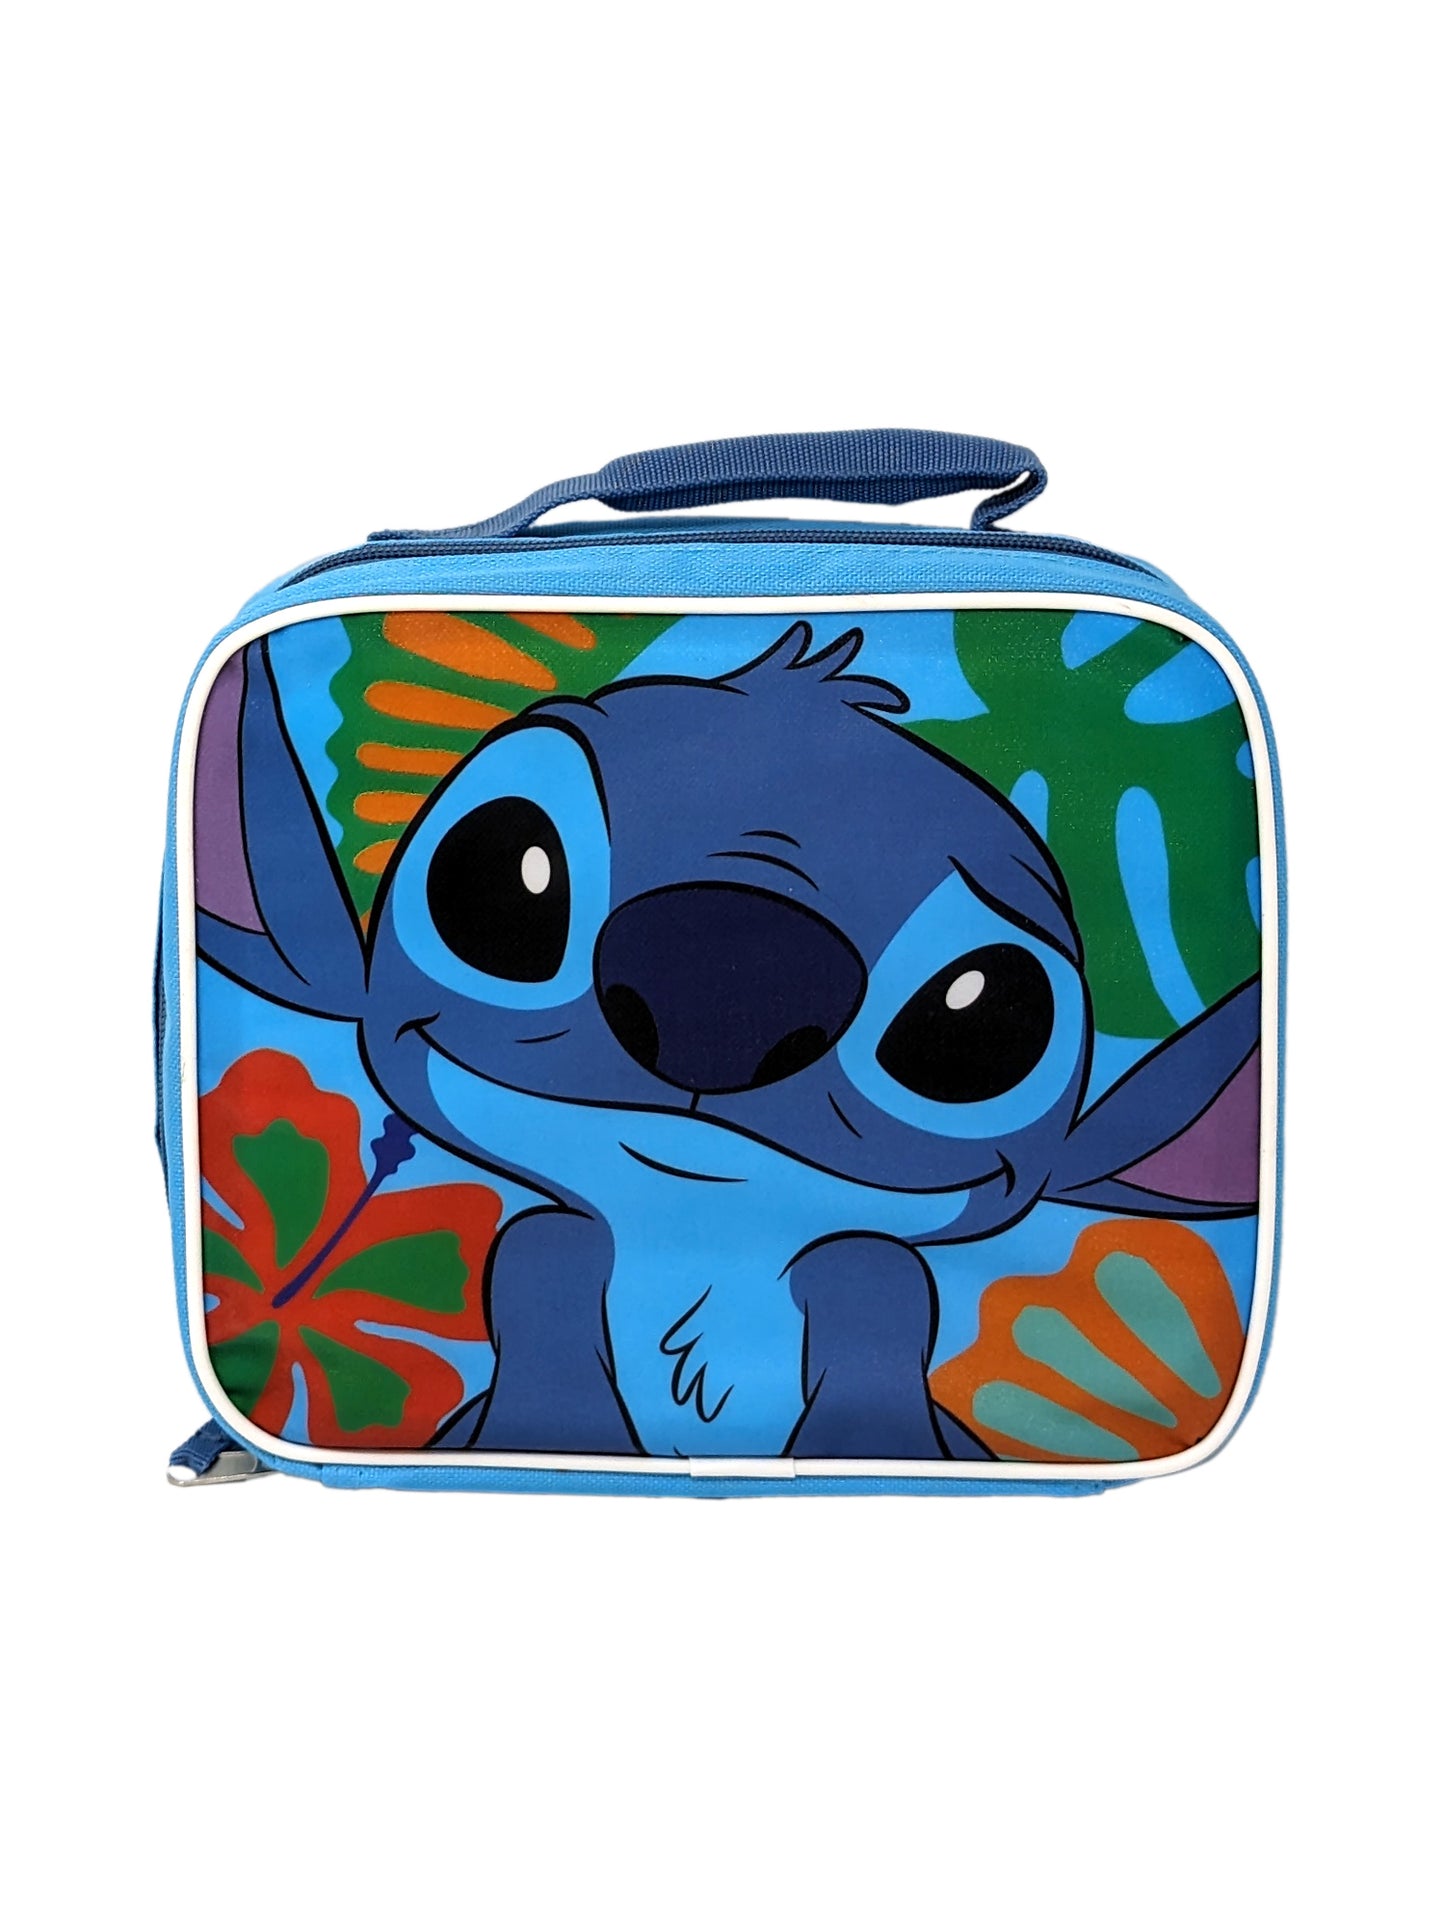 Disney Stitch Lunch Bag Insulated Alien Hawaii Flowers Girls Boys Kids Blue